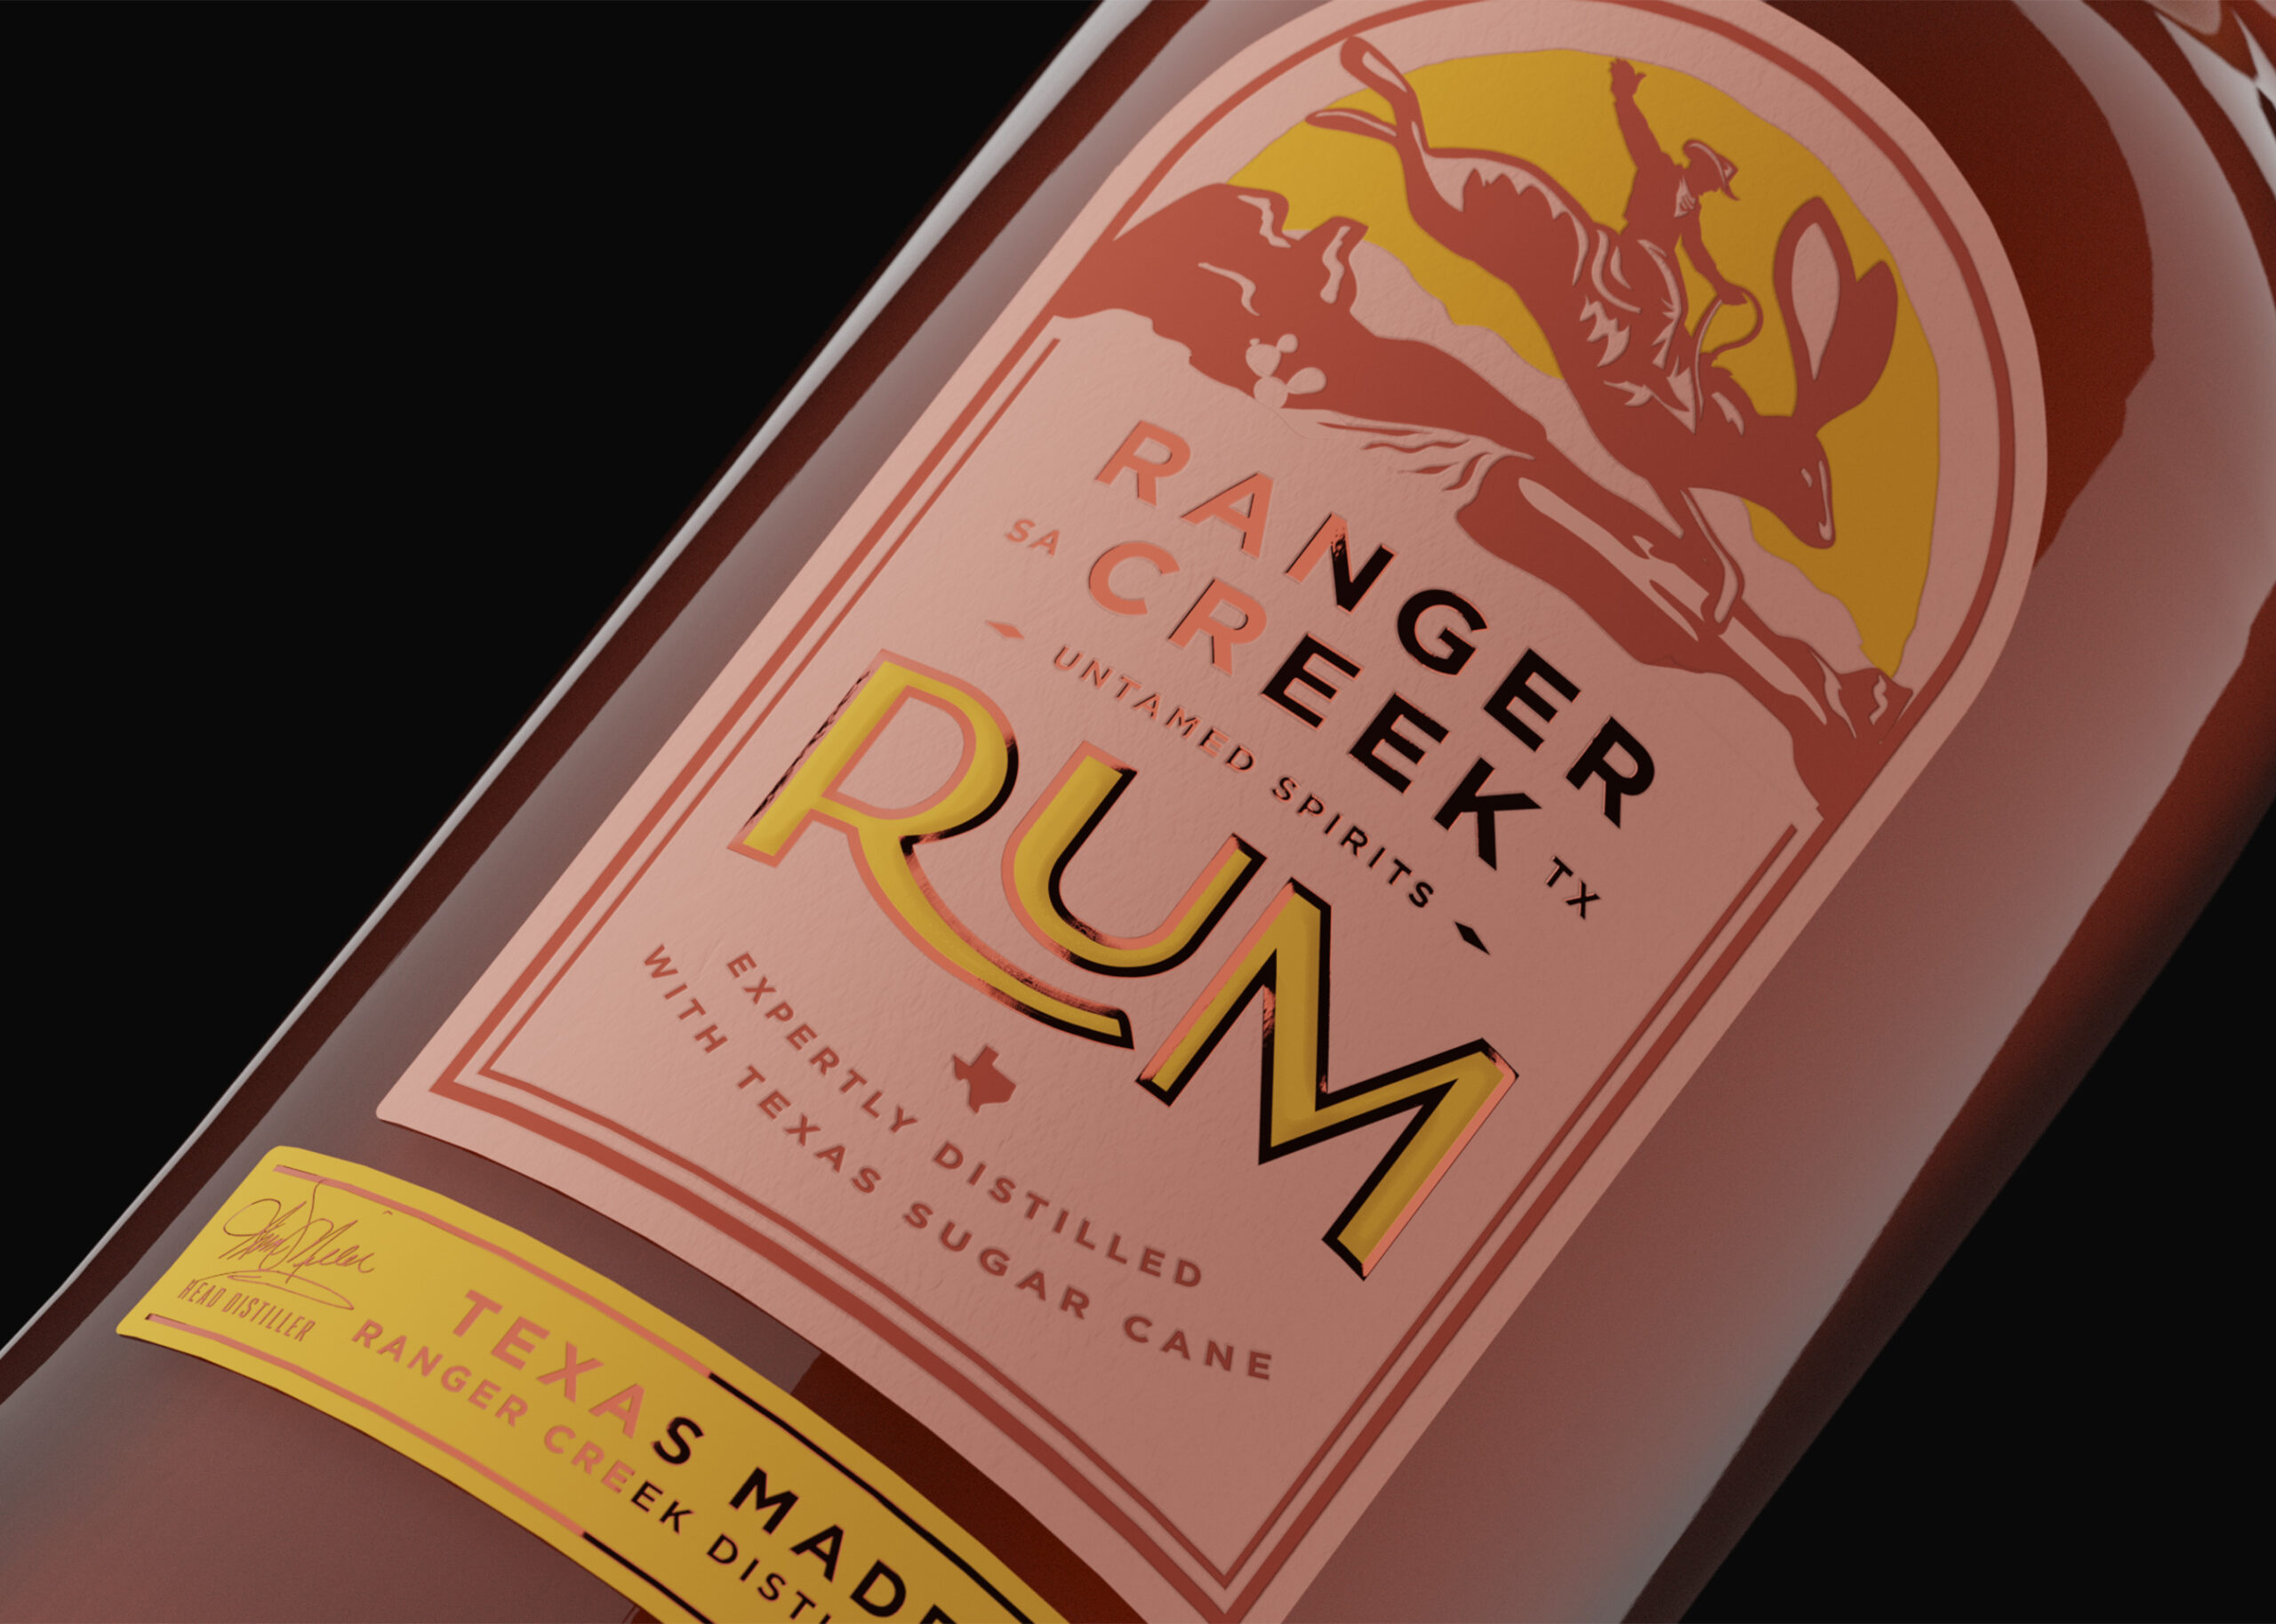 Ranger Creek Rum